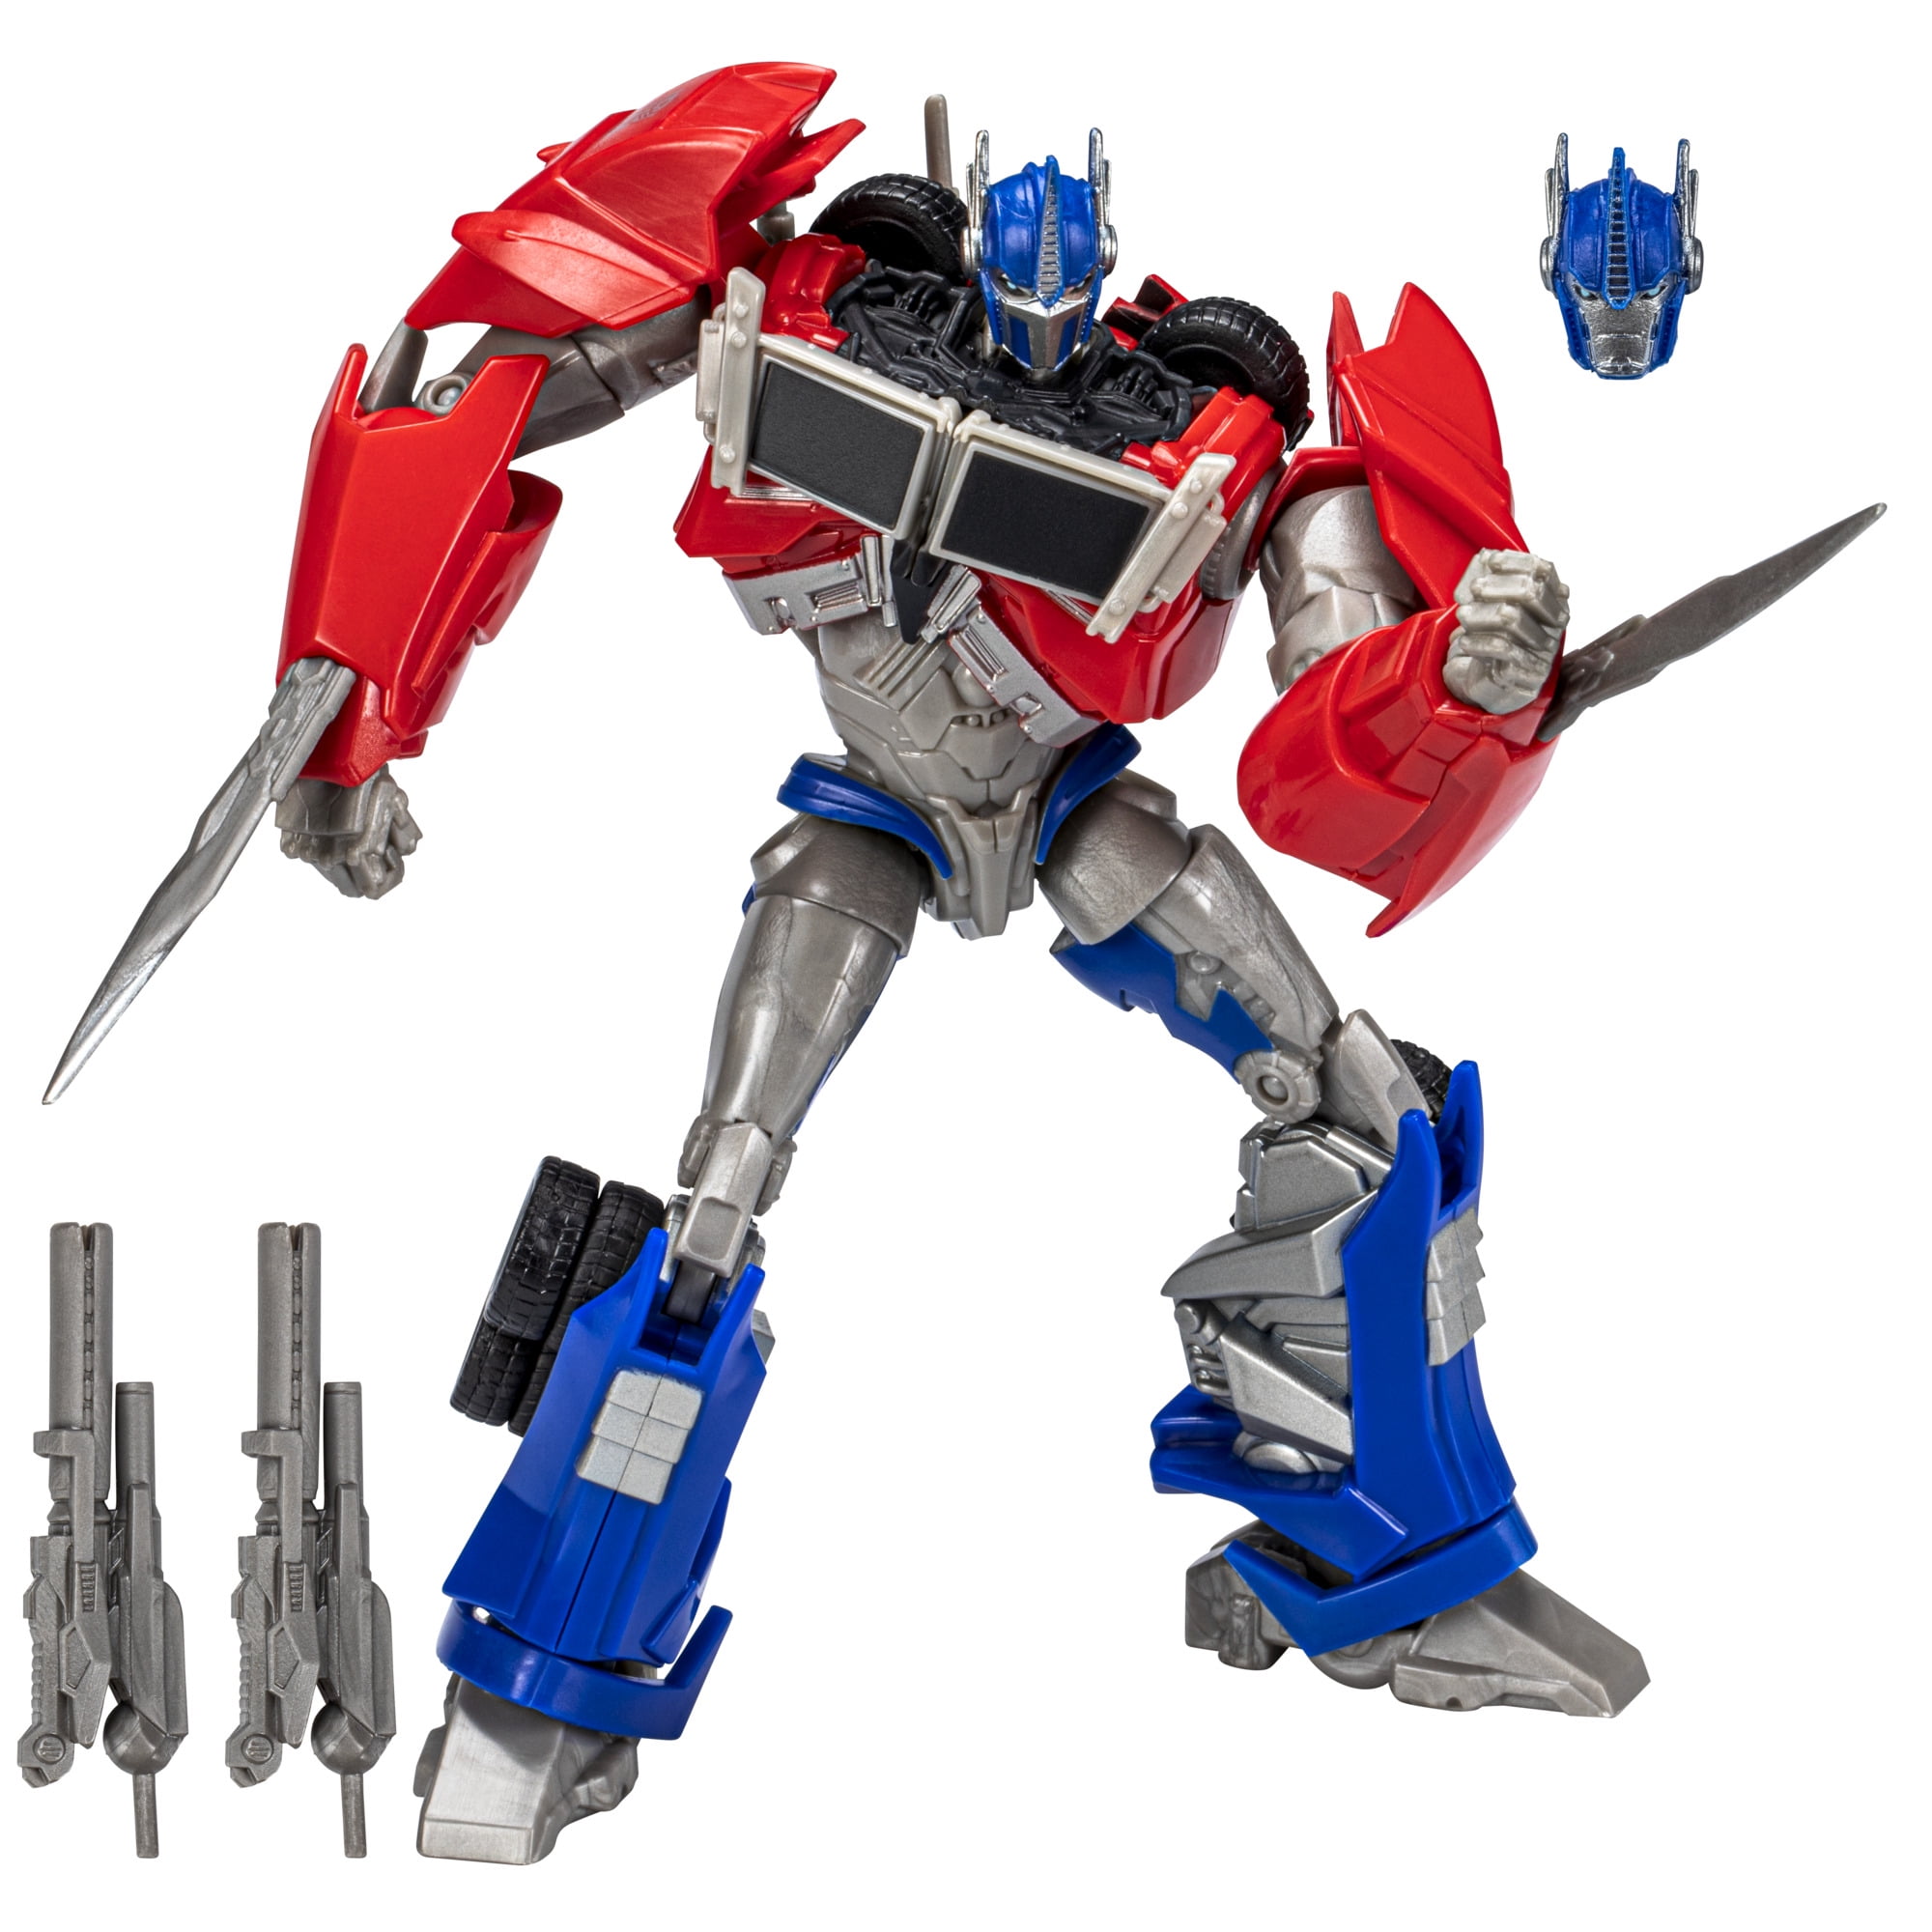 Transformers [Robot Enhanced Design] Optimus Prime Action, 41% OFF